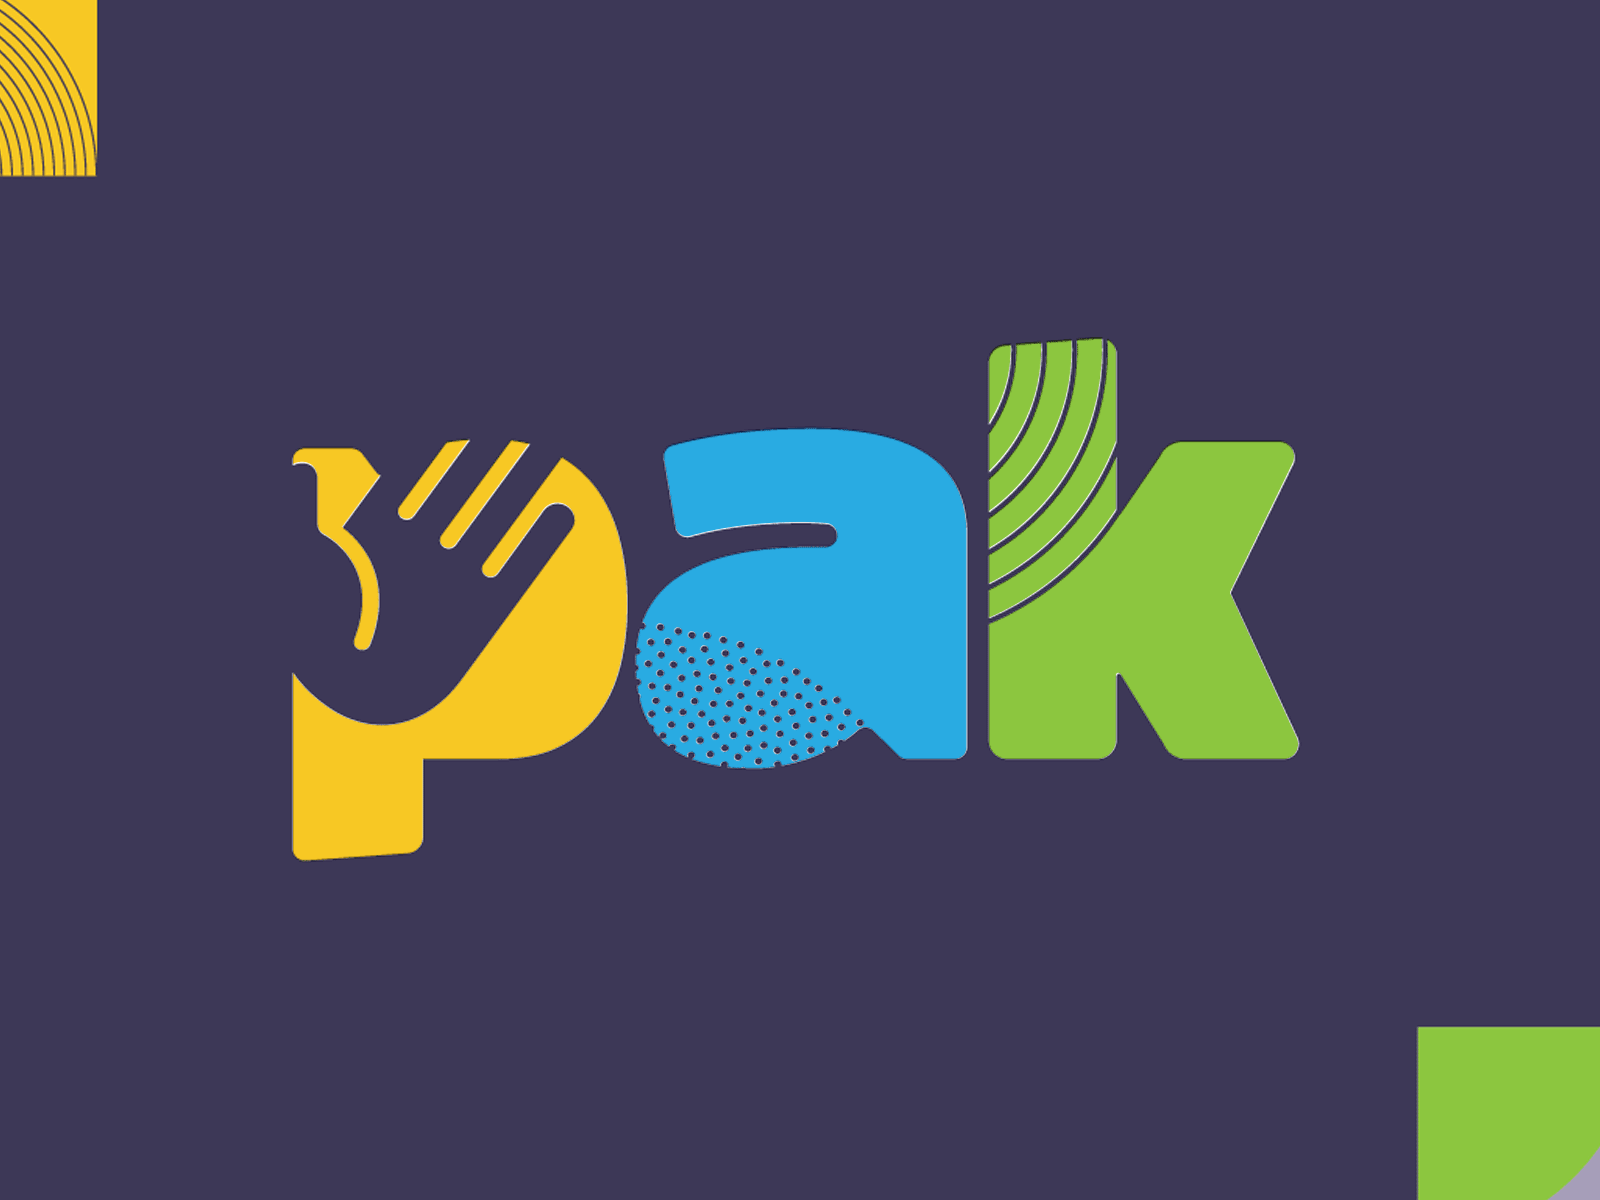 Pak / Brand Design and Art Direction